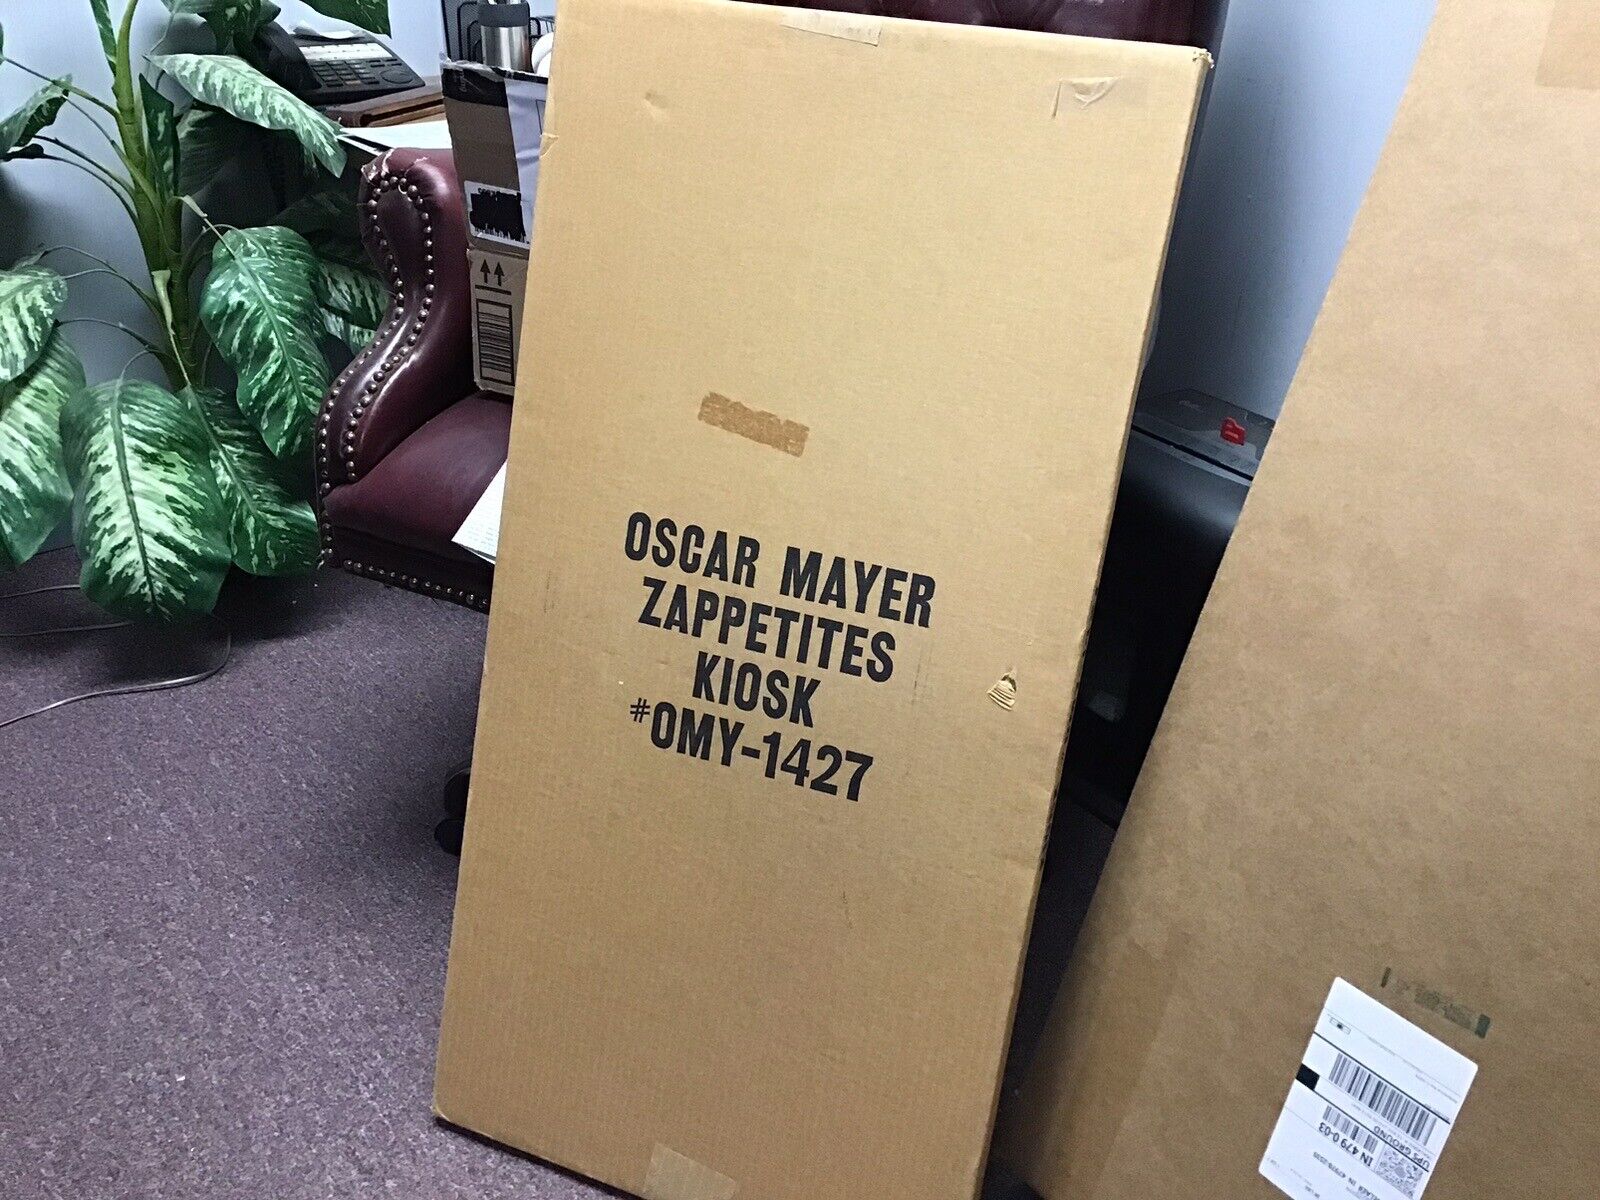 NEW Oscar Mayer ZAPPETITES Kiosk Promotional Item In Box SUPER RARE